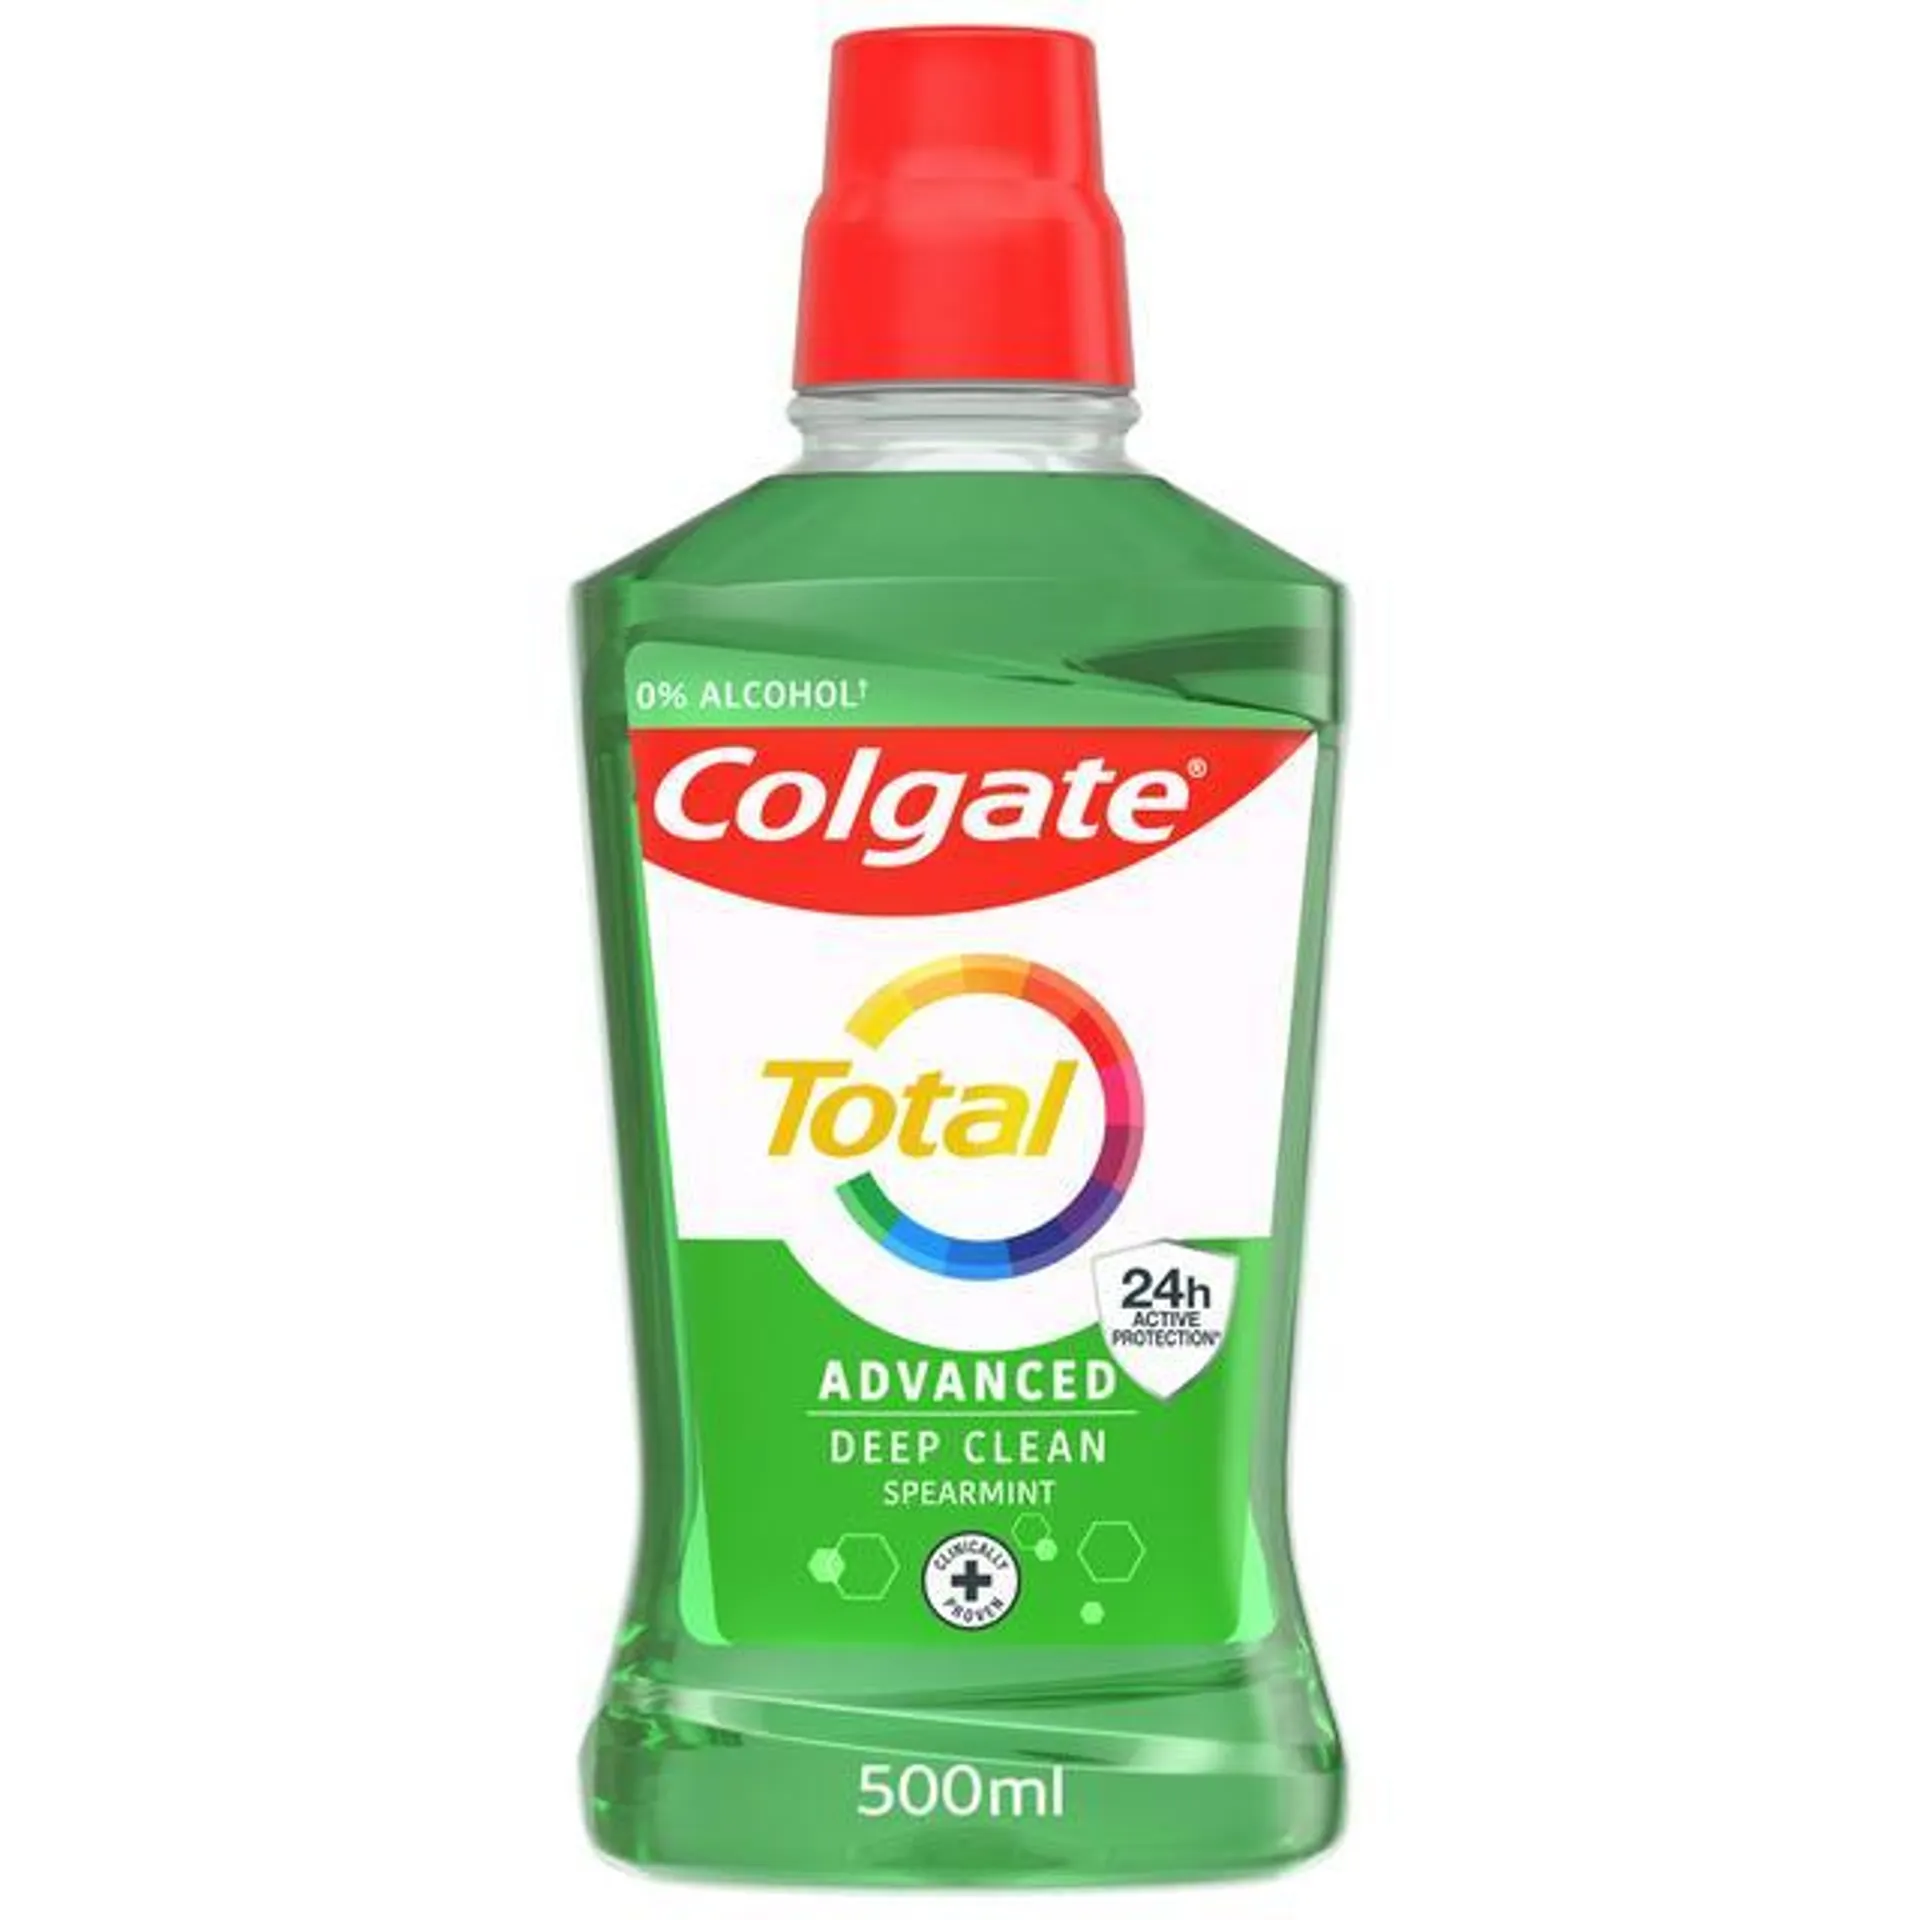 Colgate Total Advanced Deep Clean Mouthwash 500ml